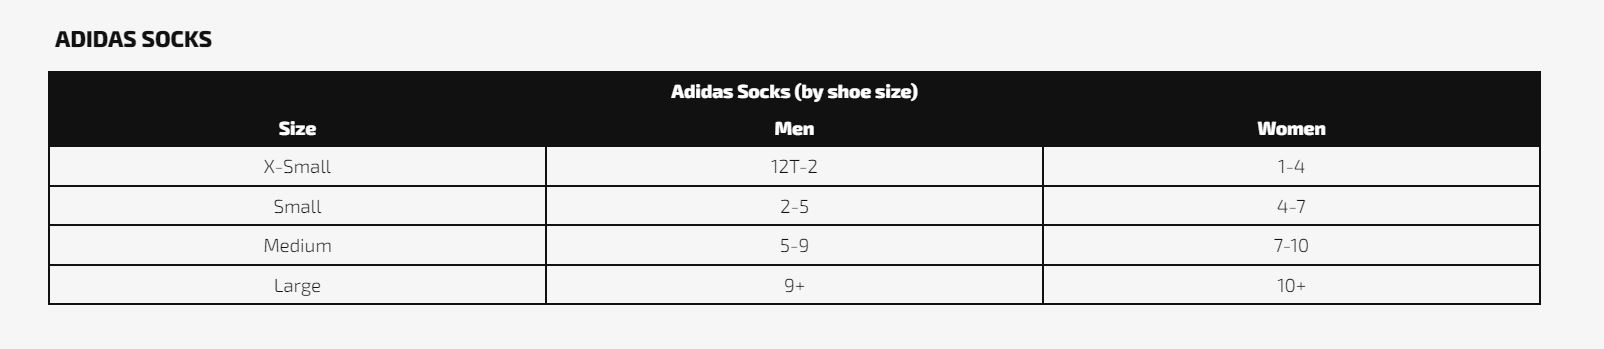 Adidas Boys Socks Size Chart